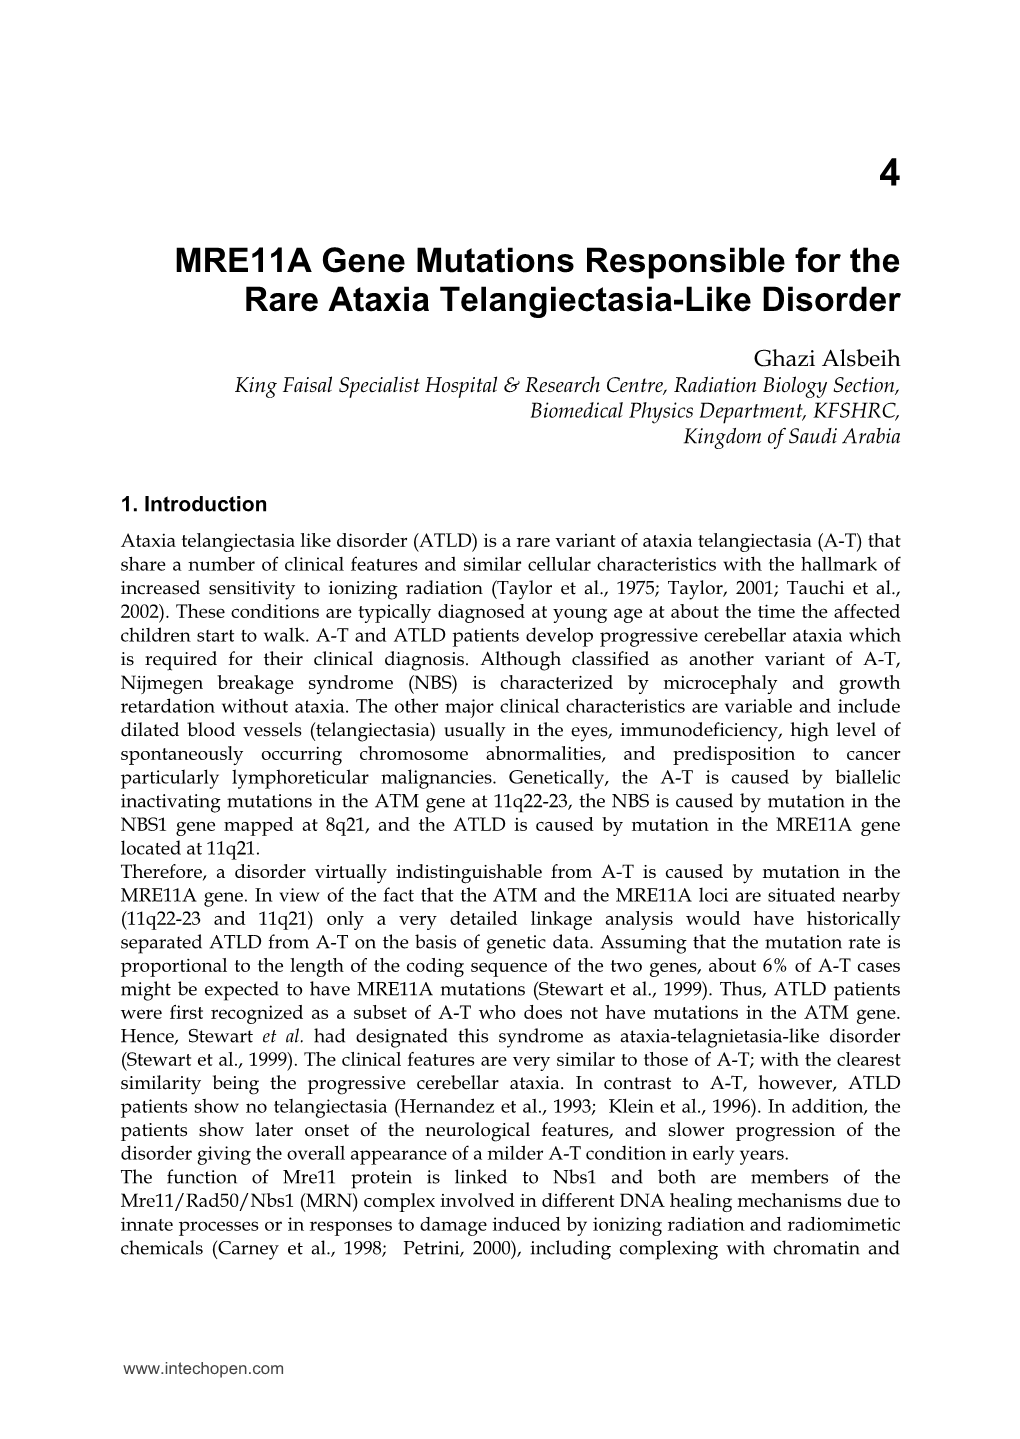 MRE11A Gene Mutations Responsible for the Rare Ataxia Telangiectasia-Like Disorder